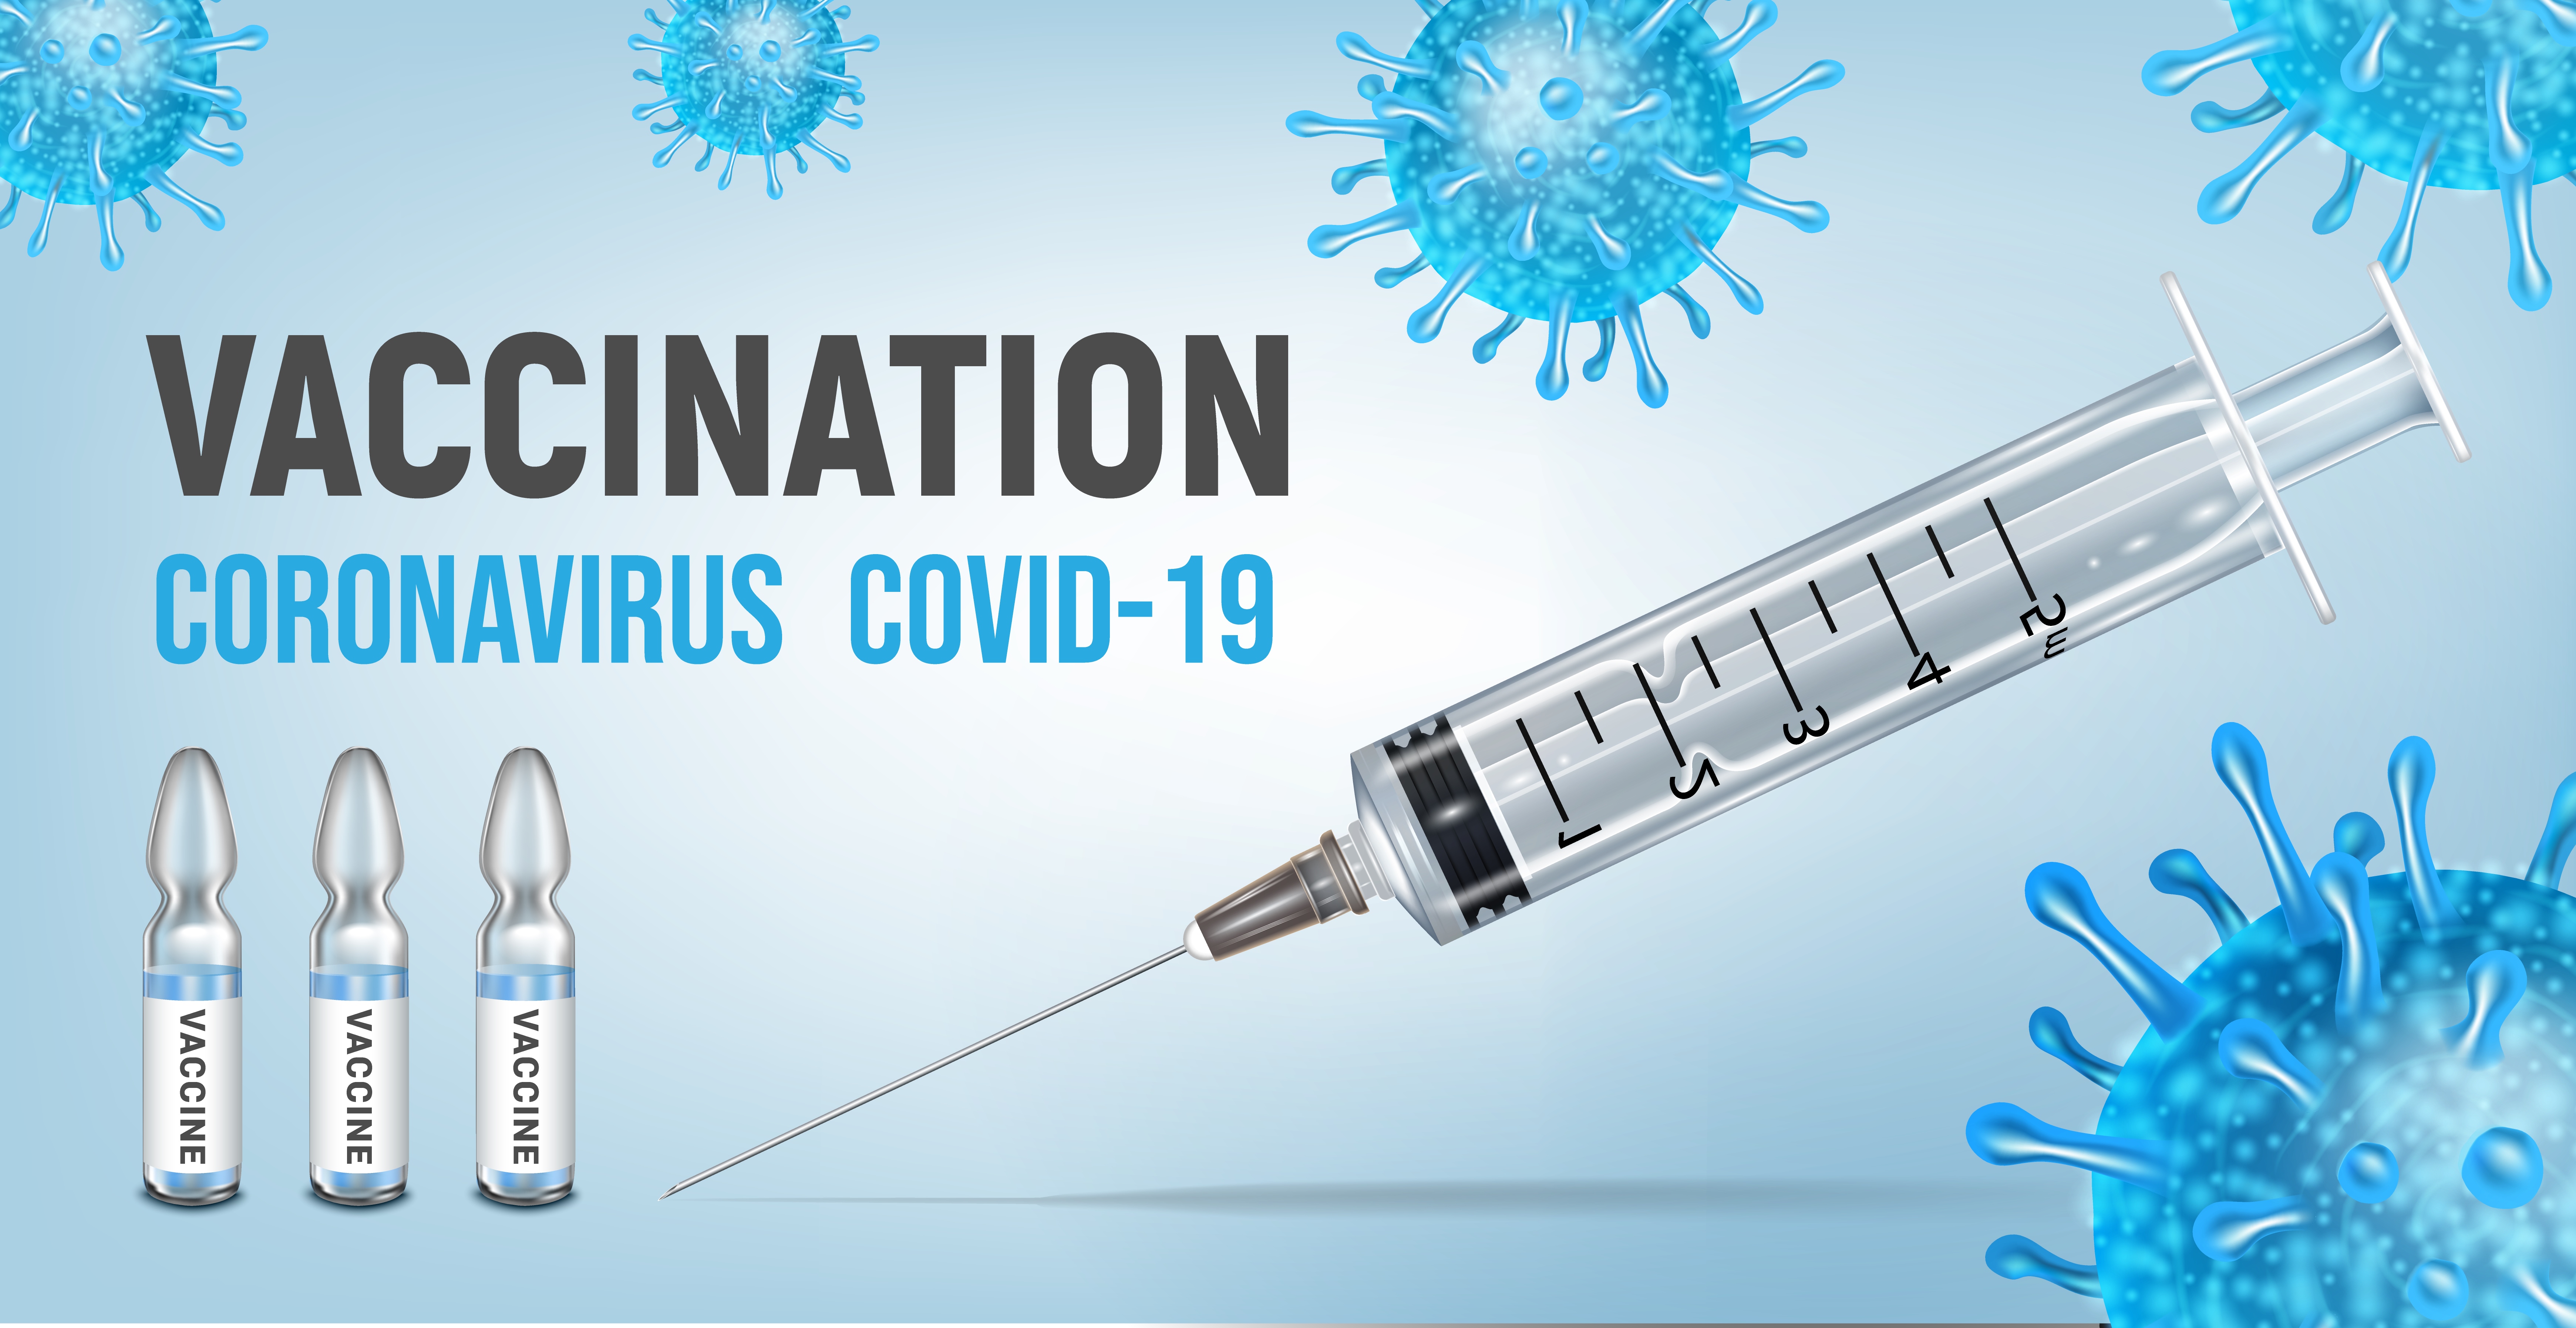 Вакцины киров. Вакцинация Covid-19. Вакцинация картинки. Вакцинация от коронавируса баннер. Реклама вакцины от коронавируса.